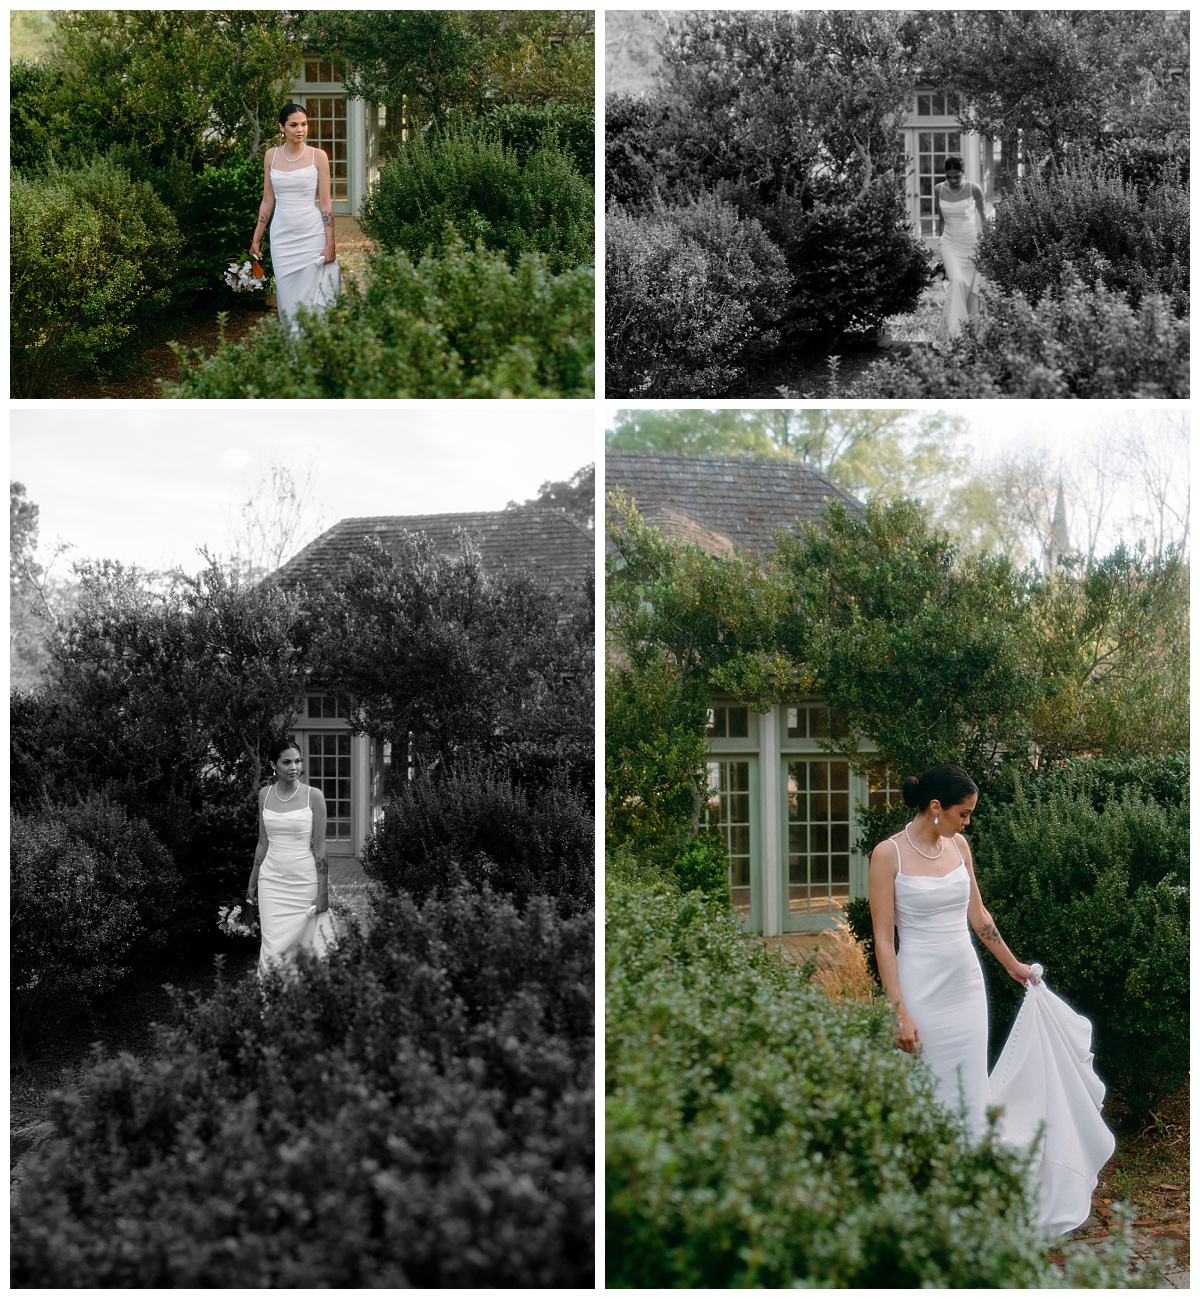 shrubbery frames bride walking along path by Charlotte wedding photographer